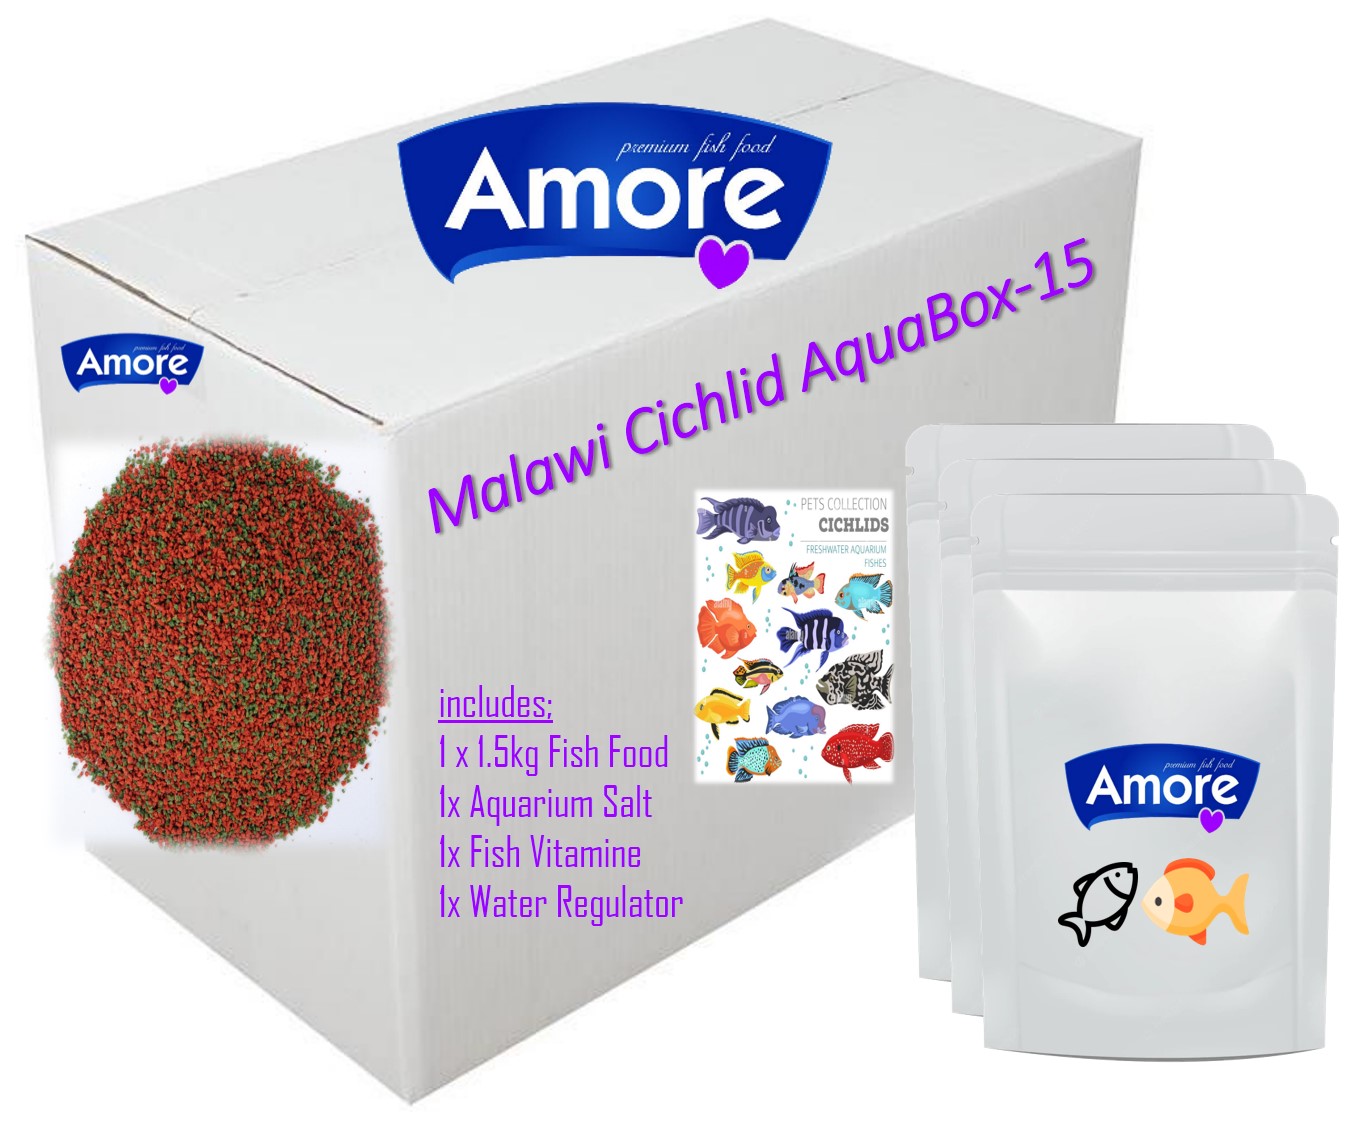 Amore Cichlid Mix Granules Balık Yemi 1.5kg Ve Akvaryum Bakım Seti Aquabox-15